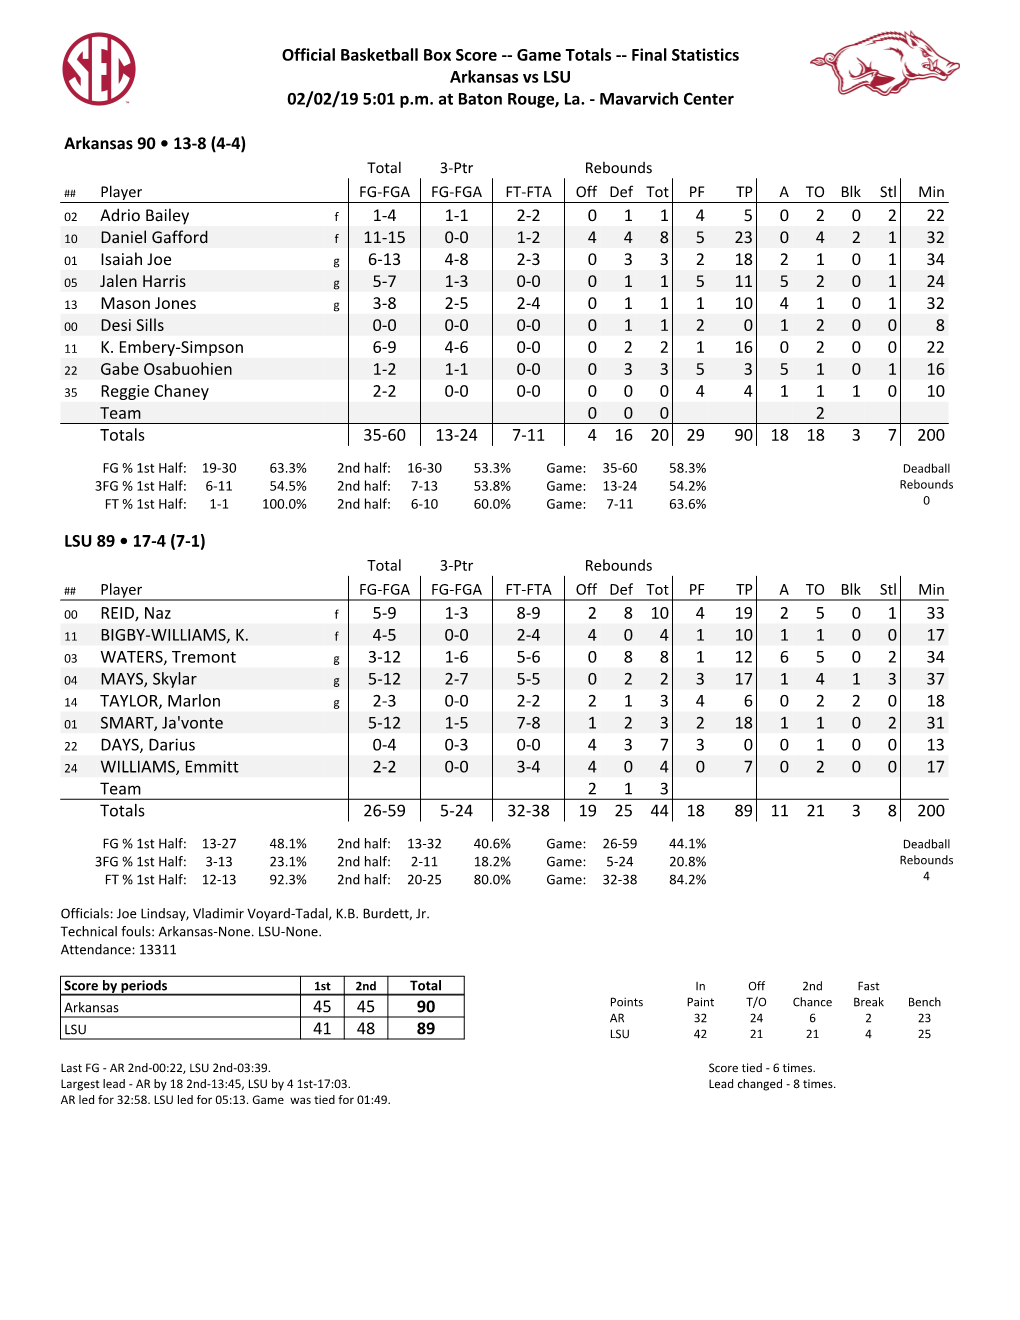 Official Basketball Box Score -- Game Totals -- Final Statistics Arkansas Vs LSU 02/02/19 5:01 P.M